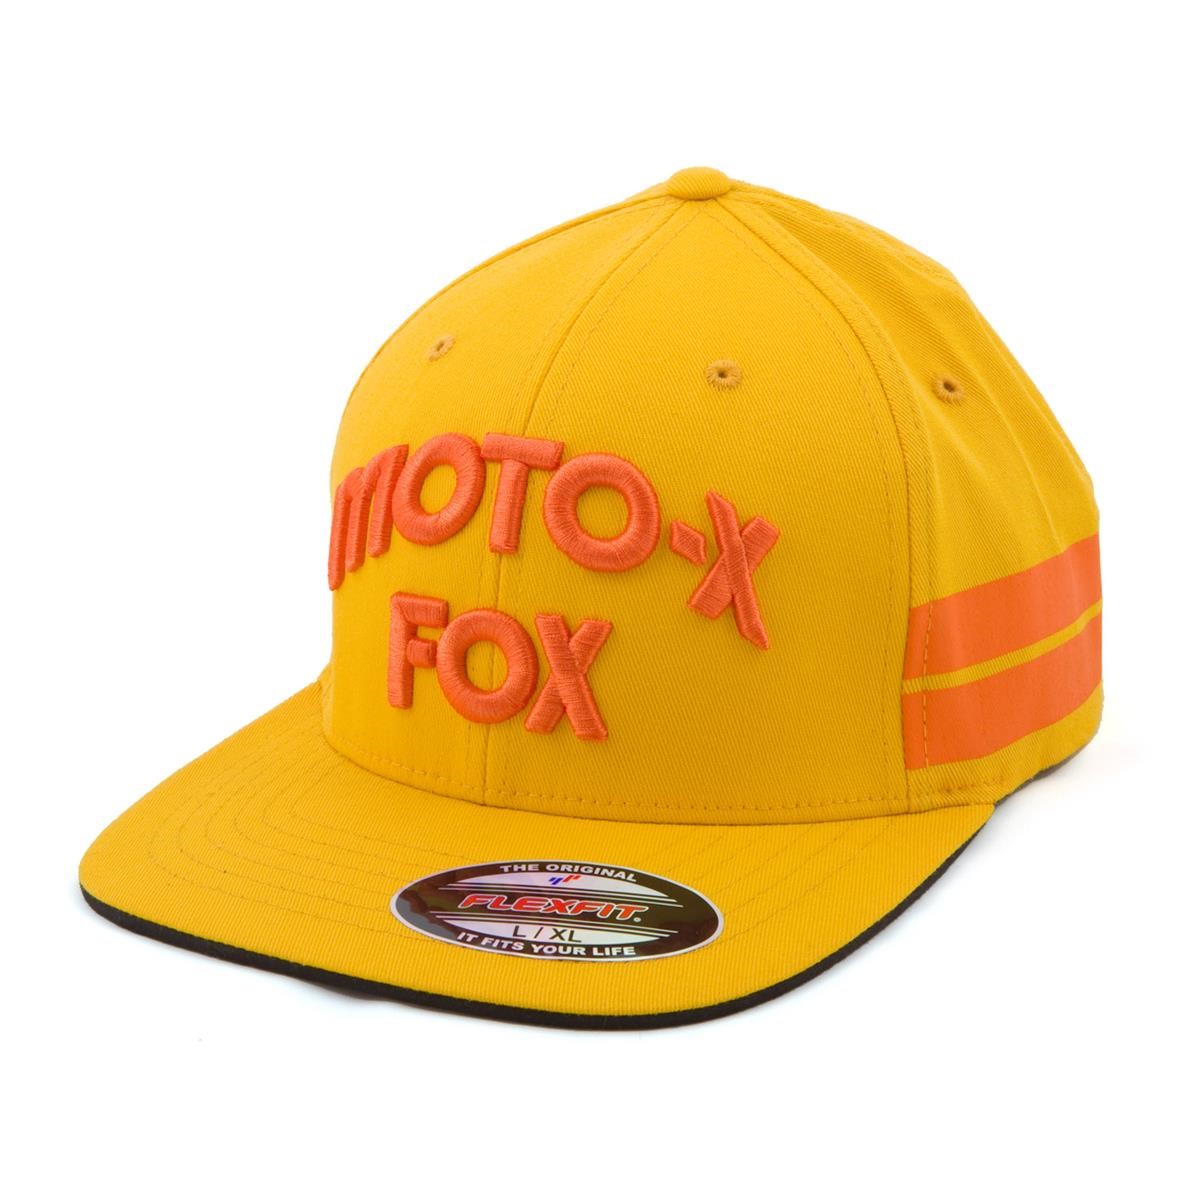 Freizeit/Streetwear Bekleidung-Beanies/Mützen/Caps - Fox Flexfit Cap/Mütze Moto-X Hall Of Fame Sunset